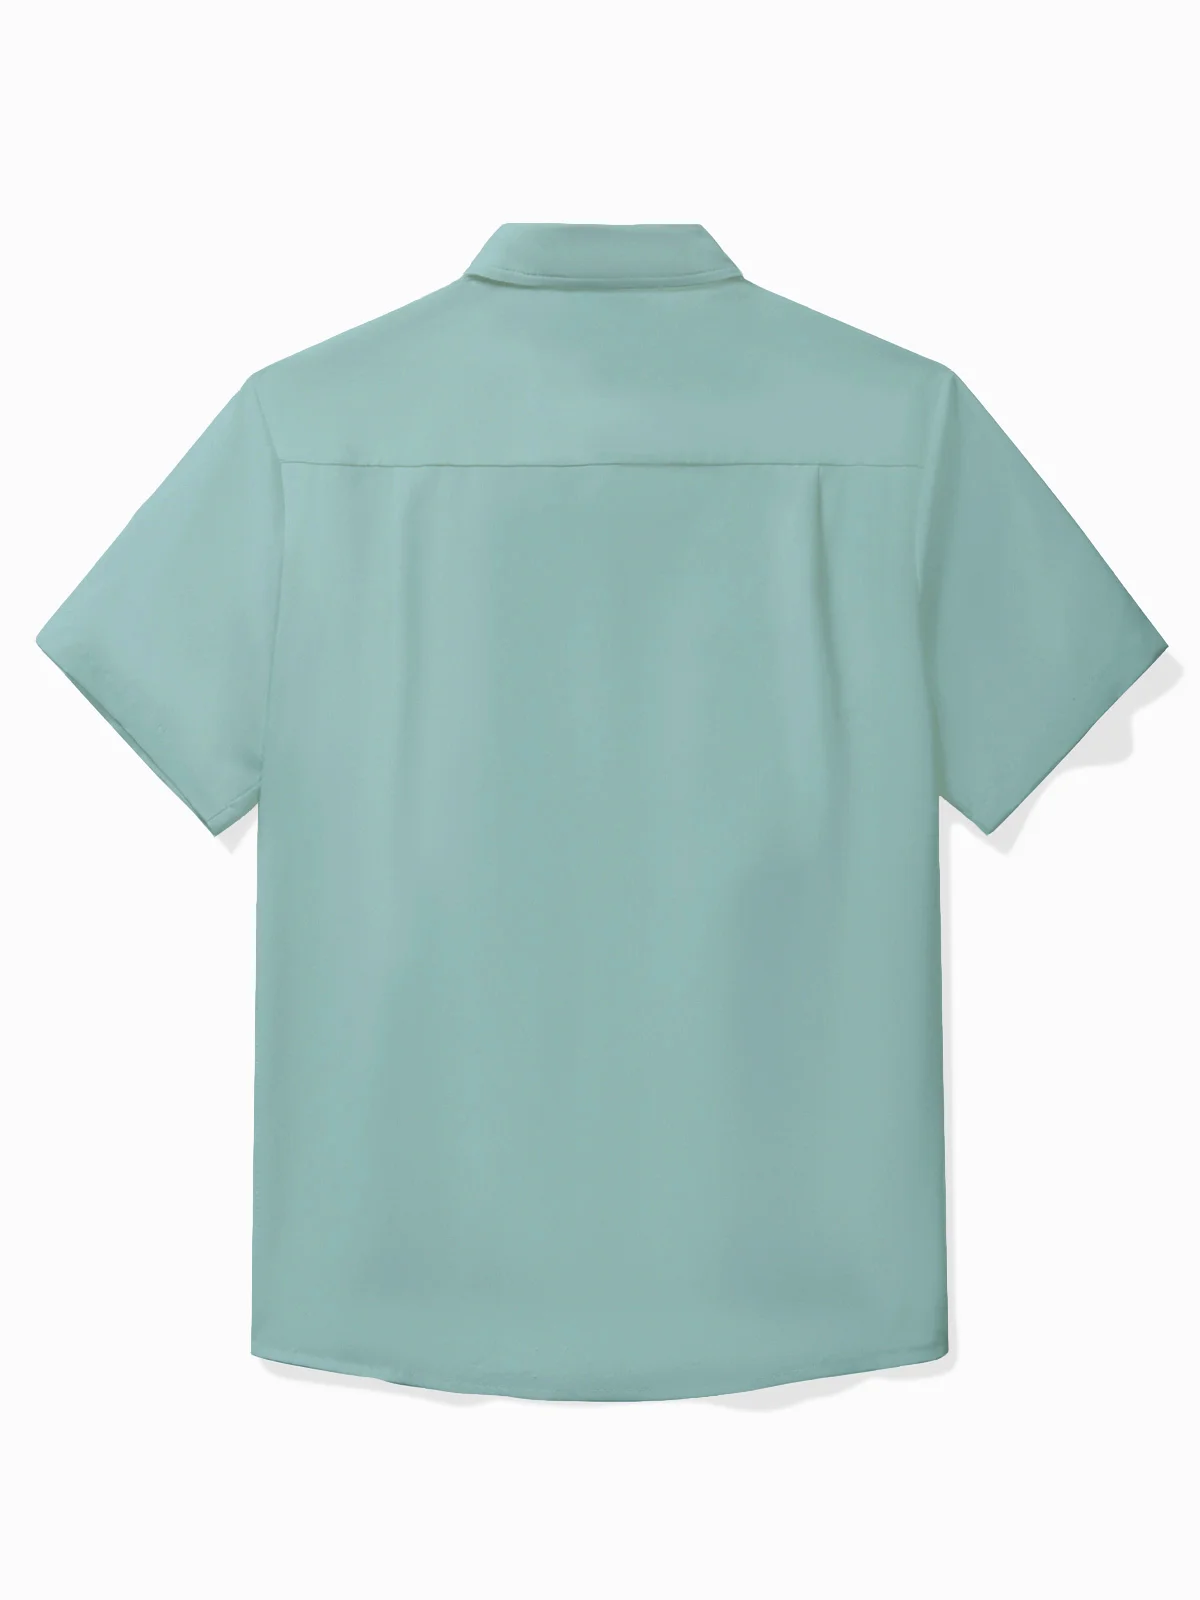 Royaura® Vintage Bowling Pin Up Girls Wine Glass Print Hawaiian Shirt Plus Size Holiday Shirt